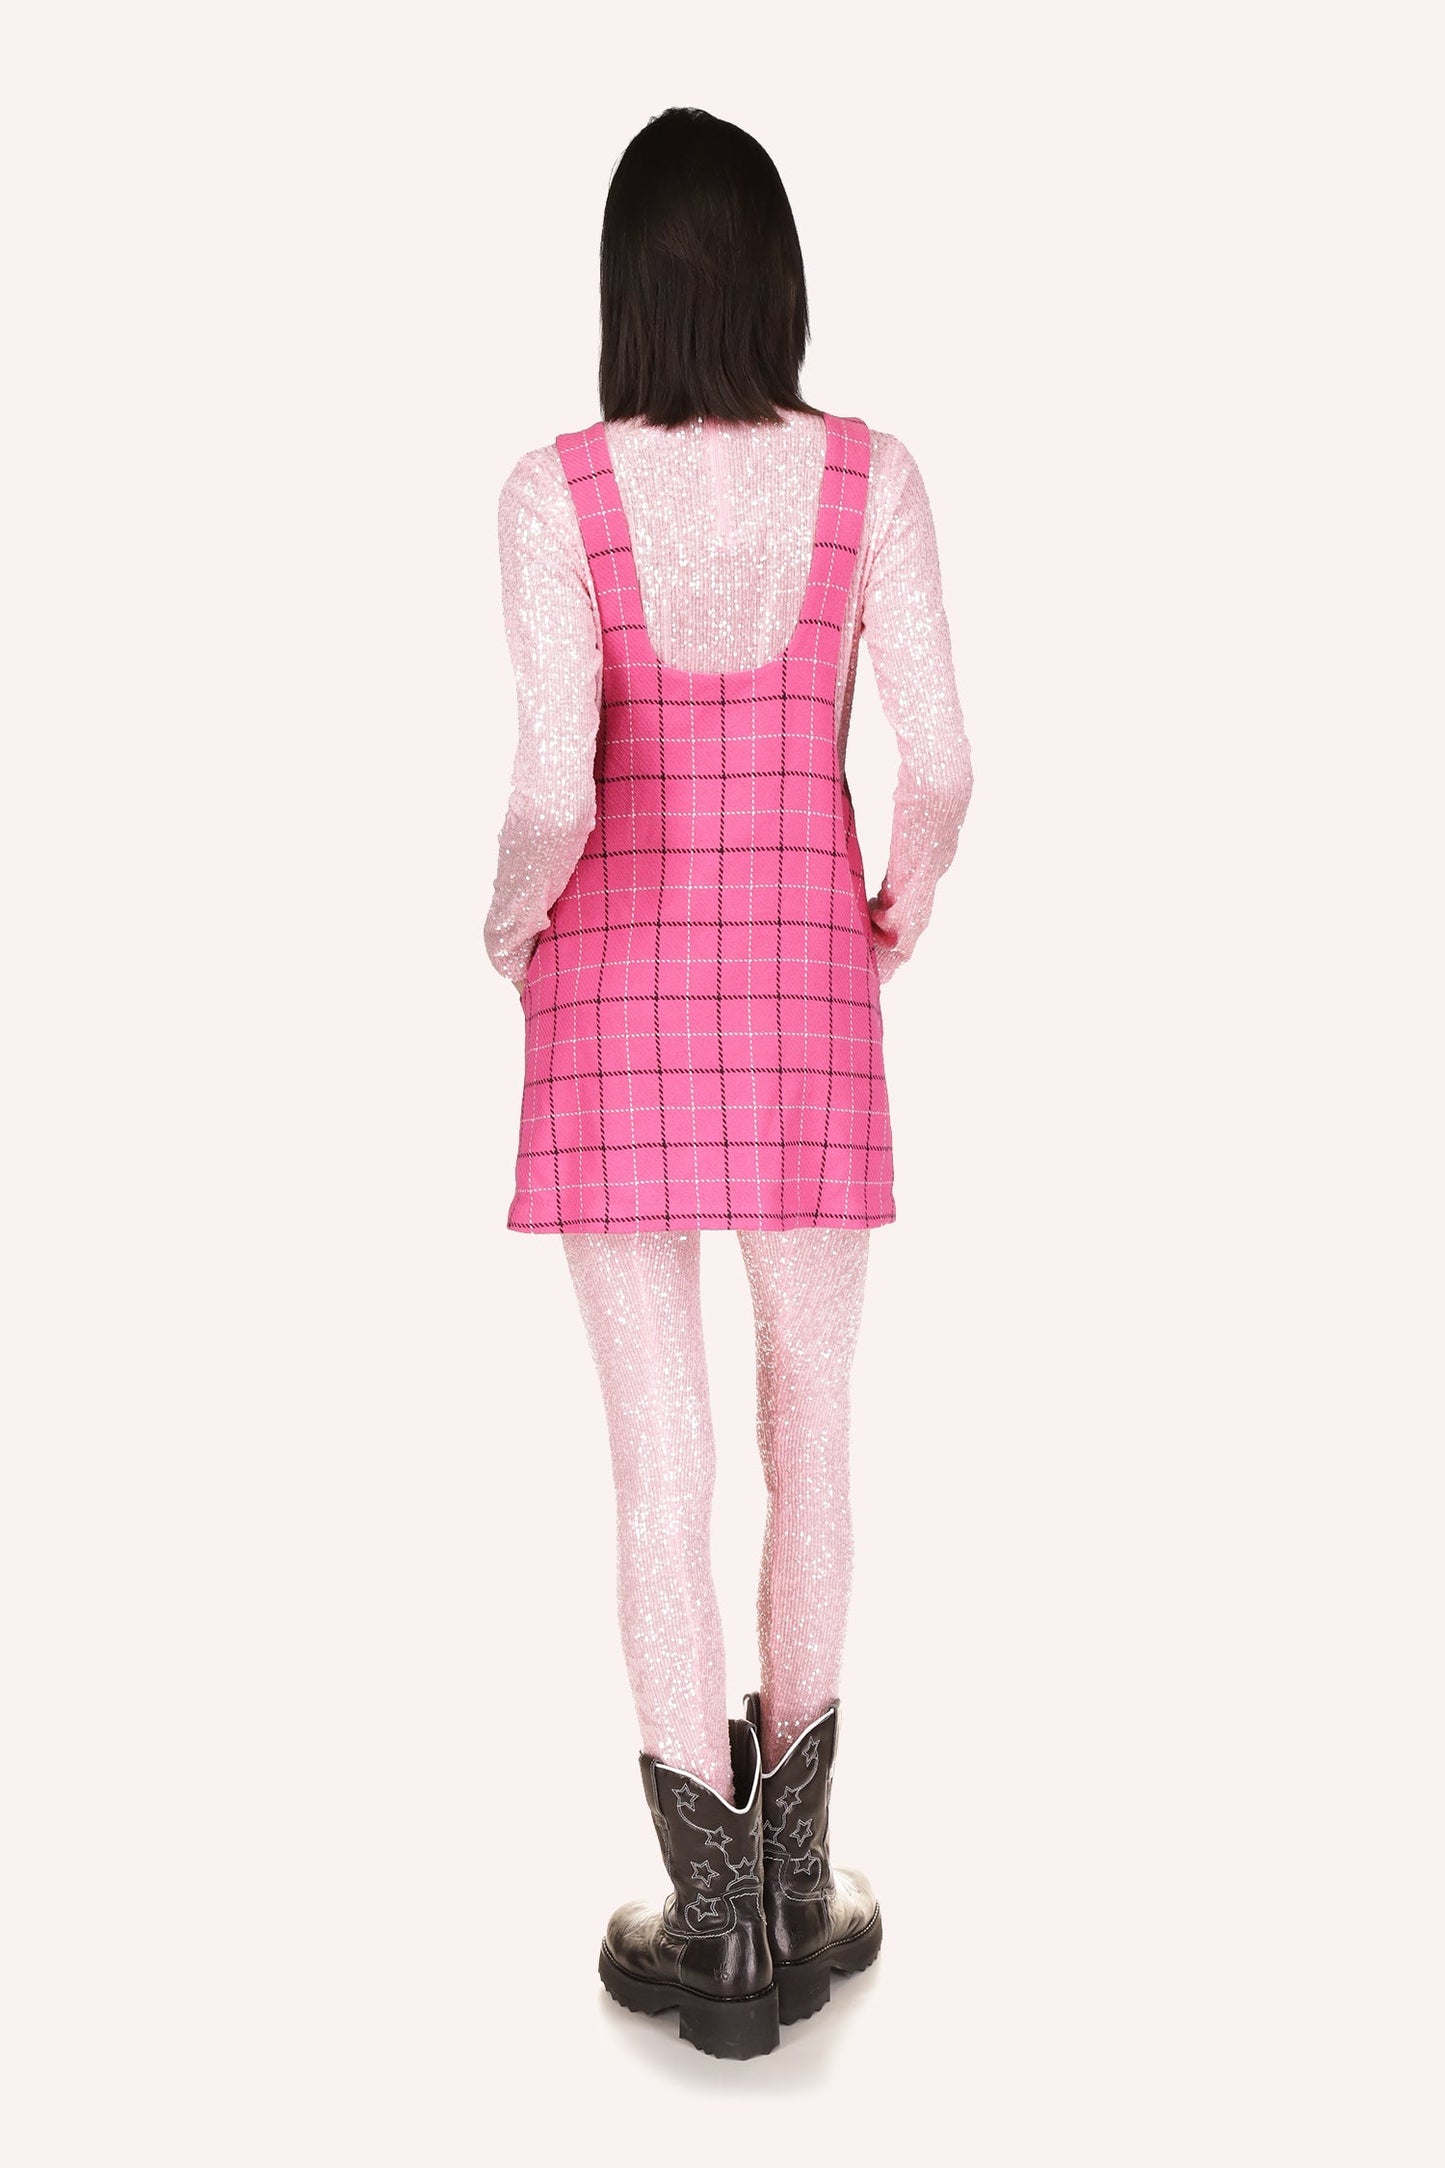 La jeune fille est élégante dans la mini robe rose Windowpane Jumper Bubblegum Multi d'Anna Sui.